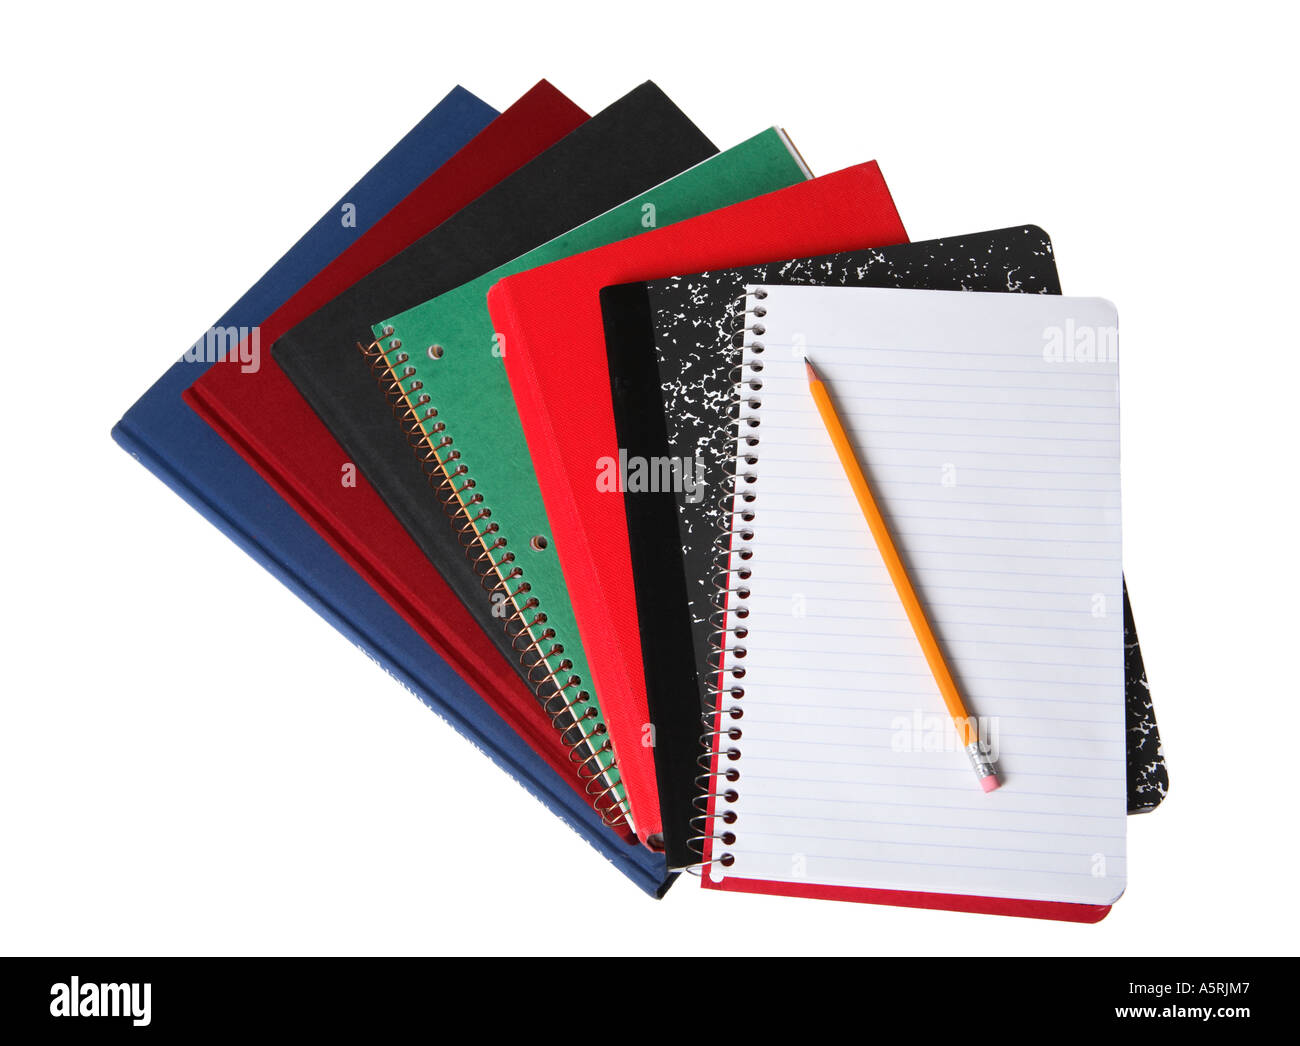 Cuadernos escolares fotografías e imágenes de alta resolución - Alamy